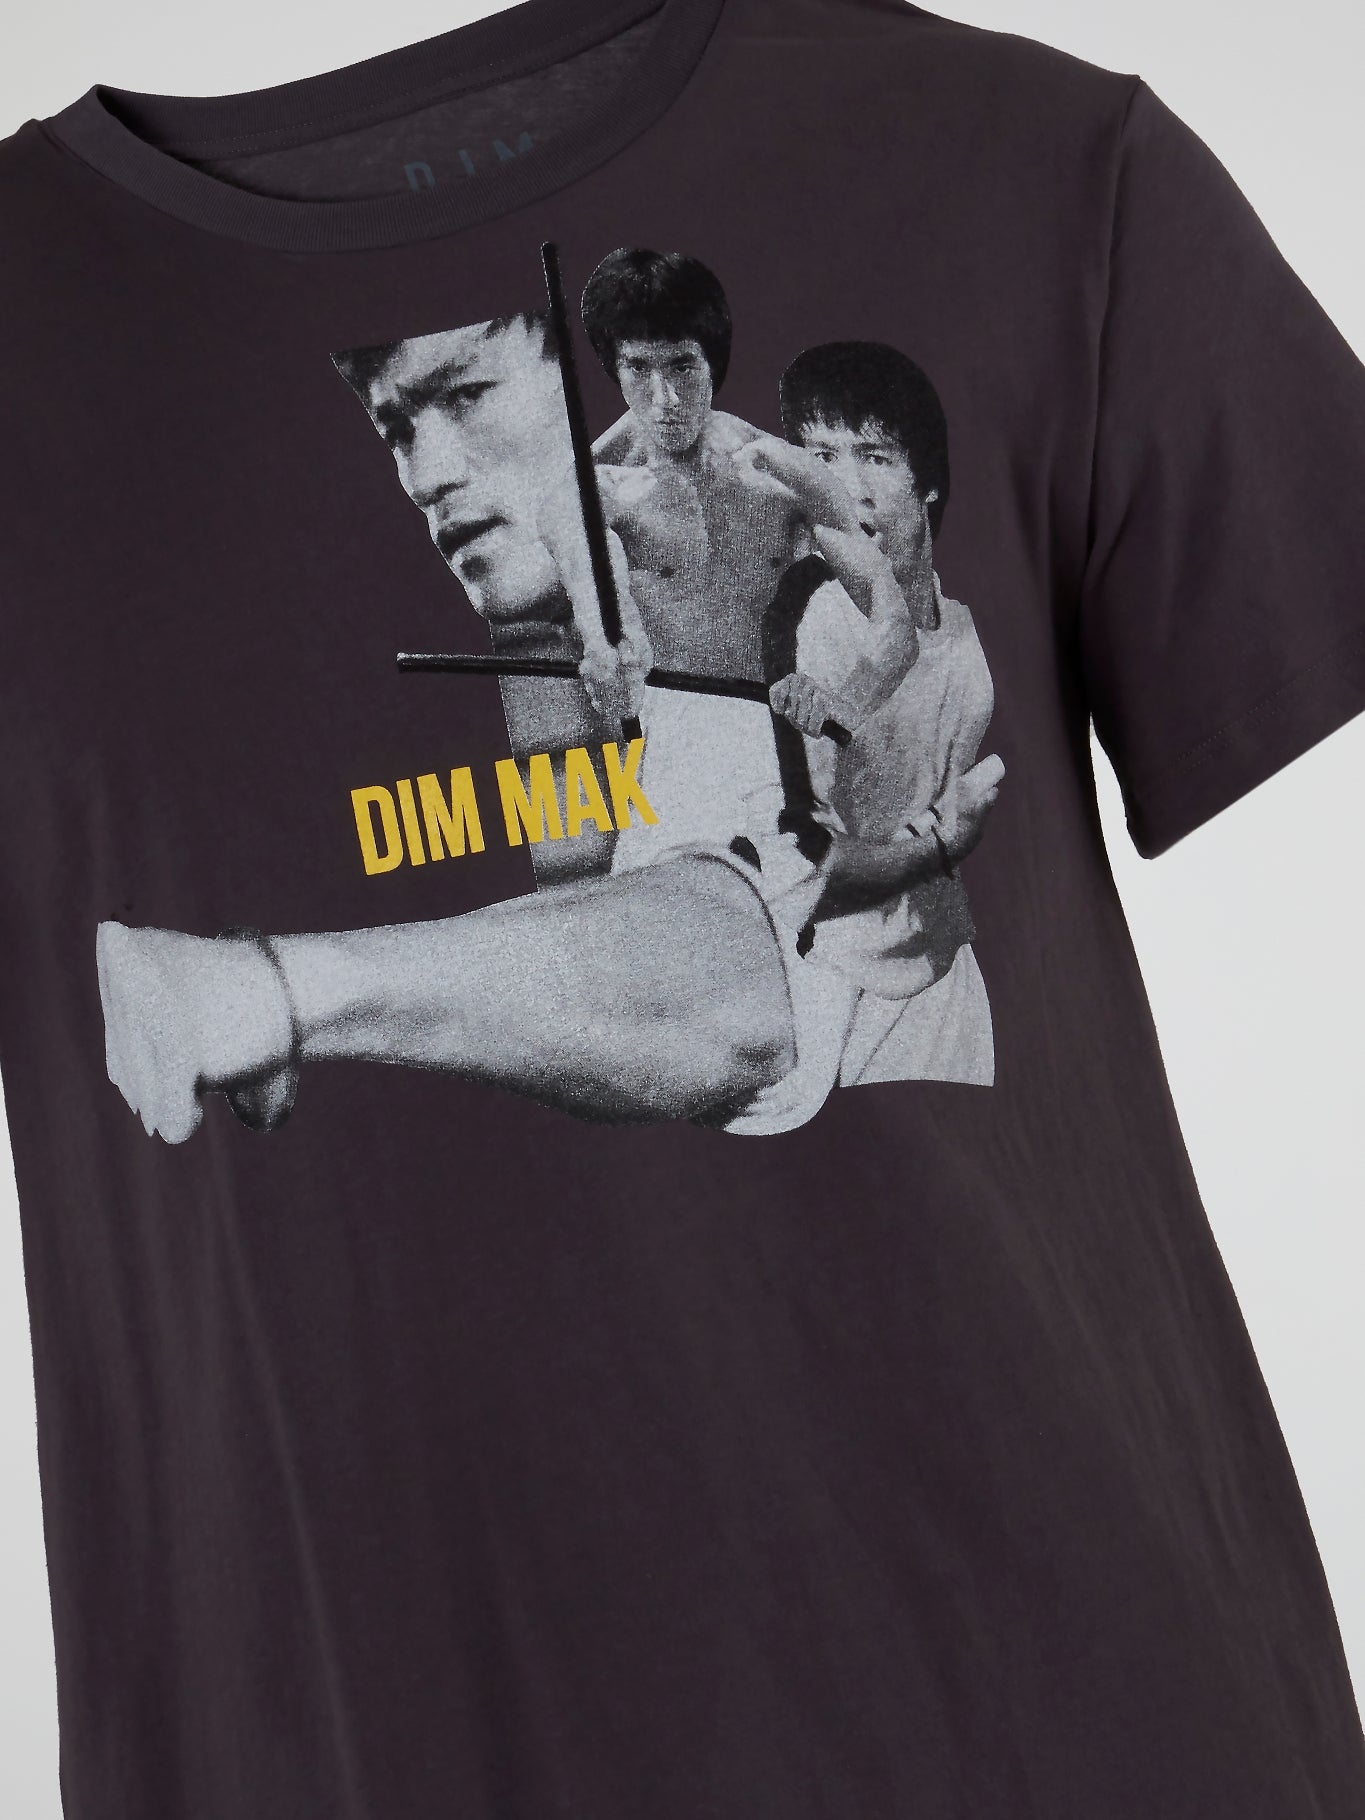 Bruce Lee Fist T-Shirt